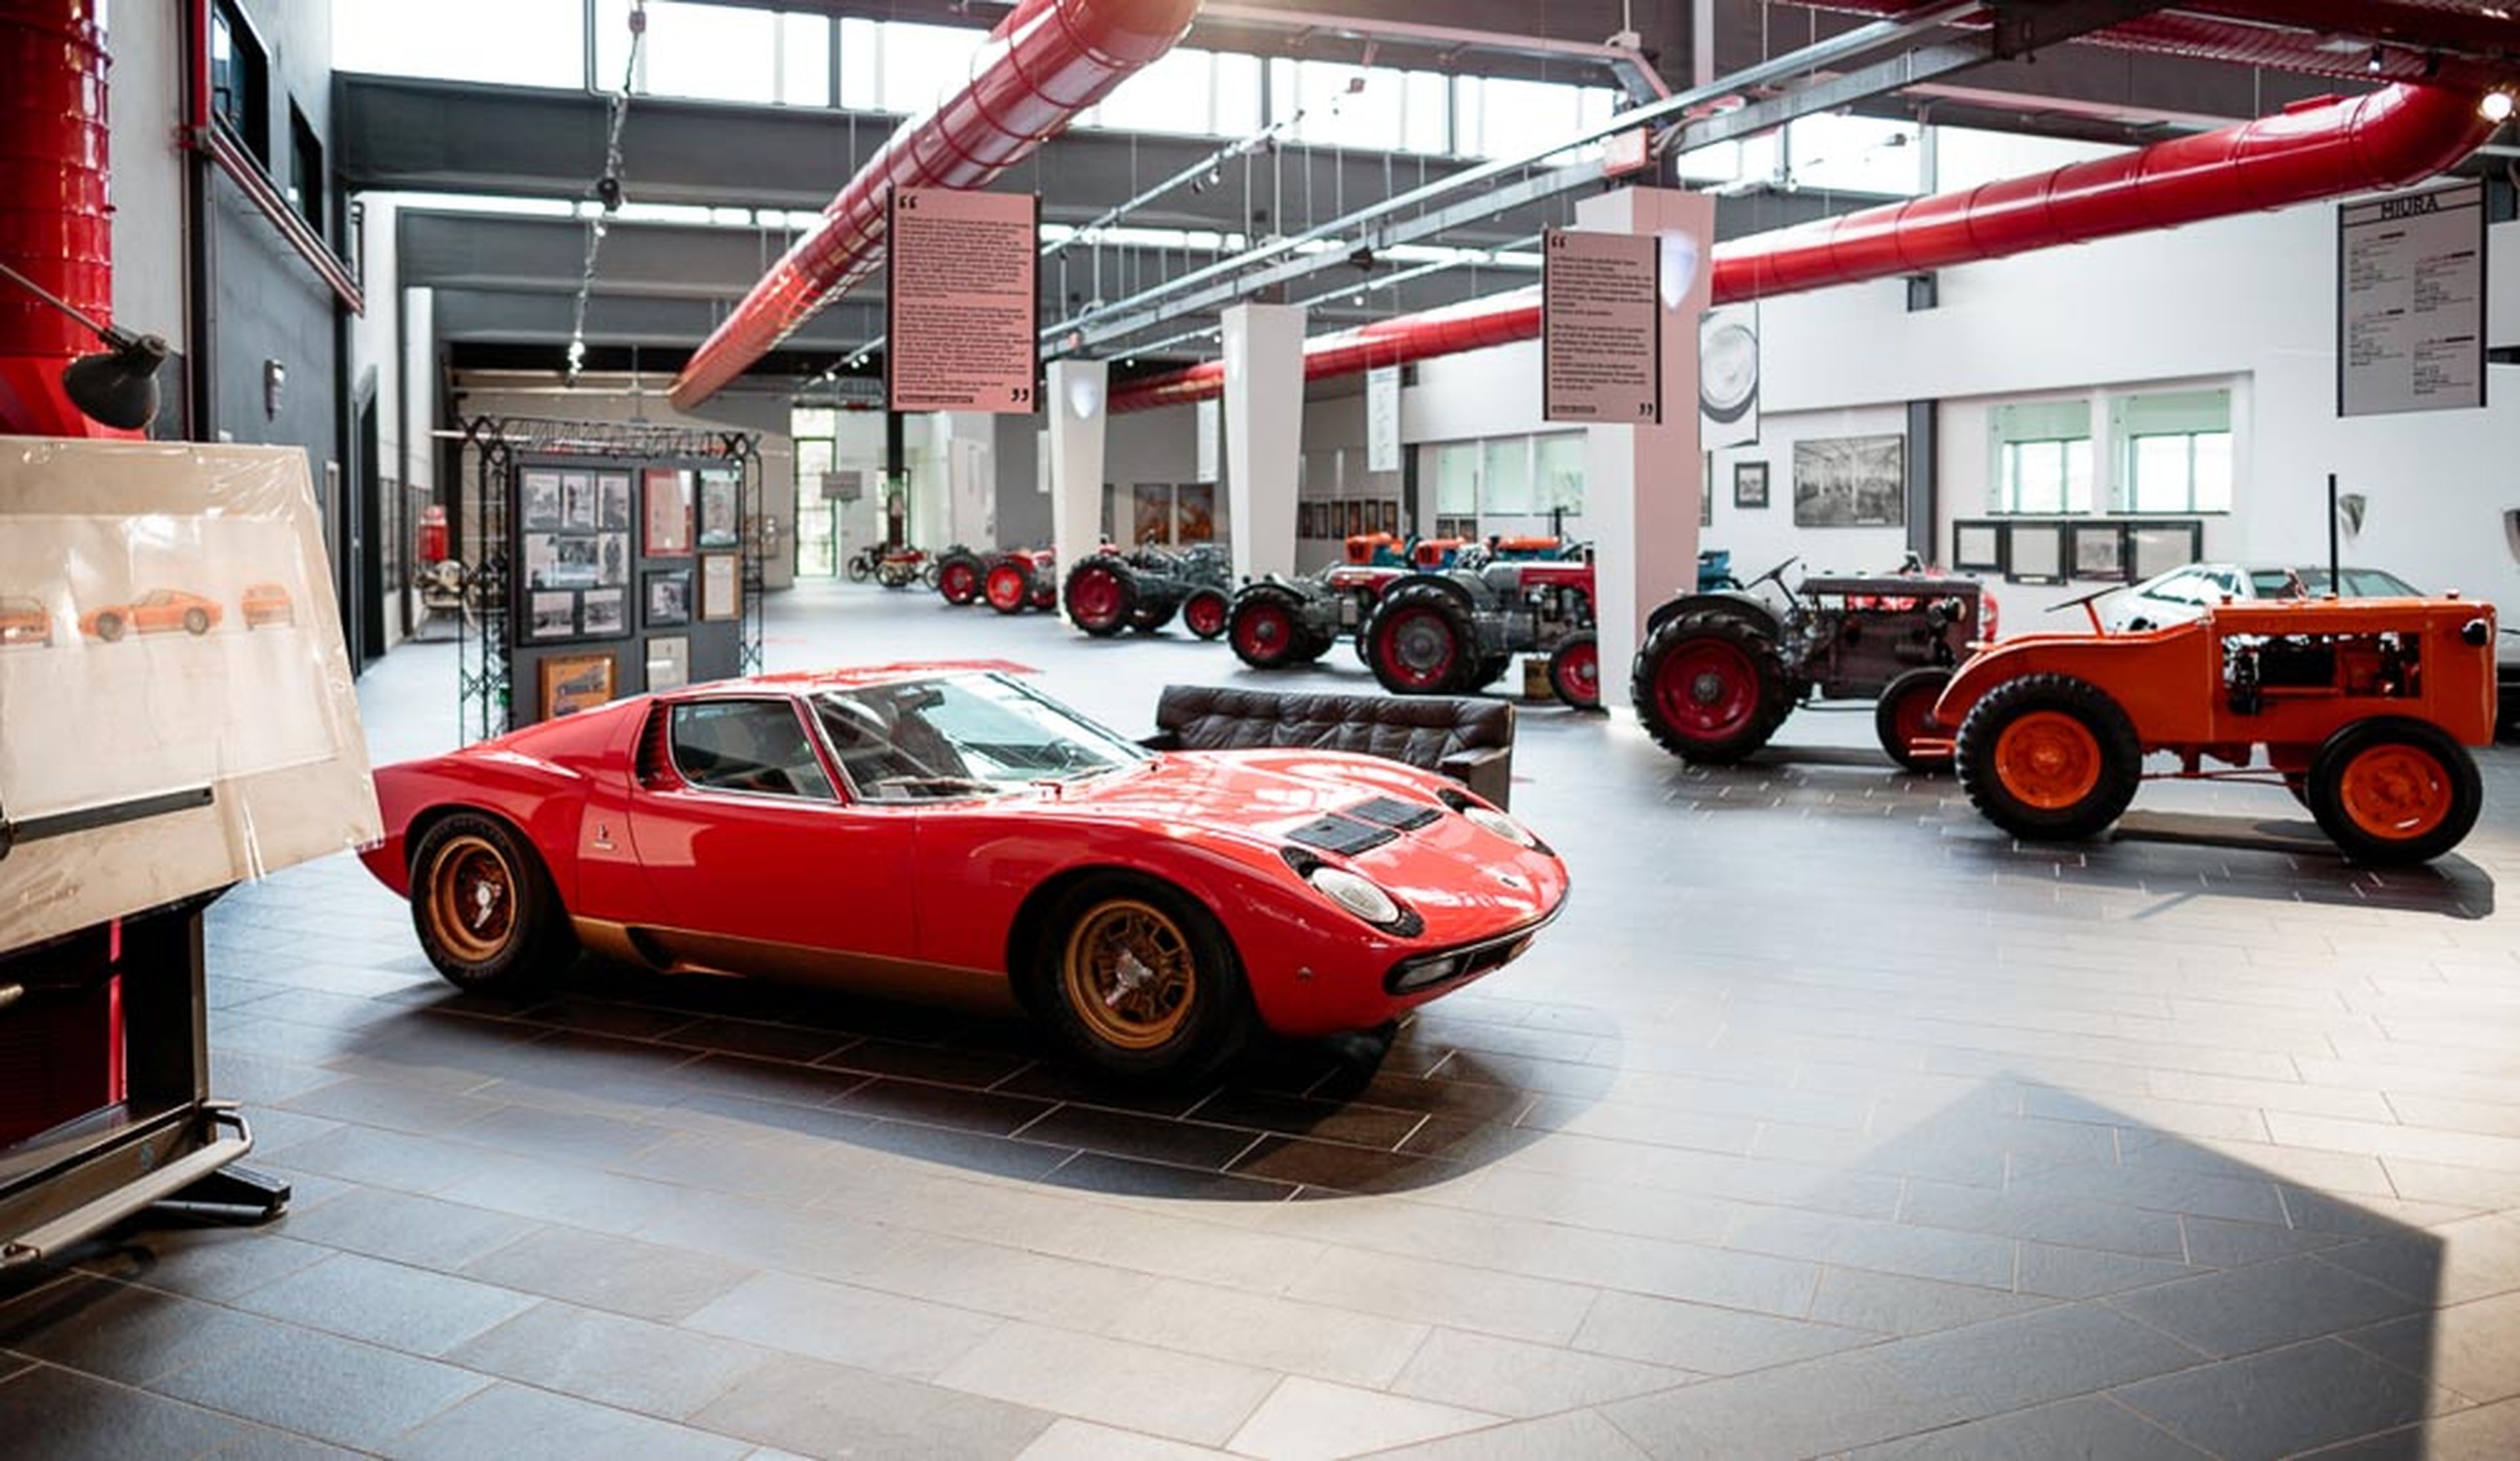 Museo de Ferruccio Lamborghini, con tractores de la marca.